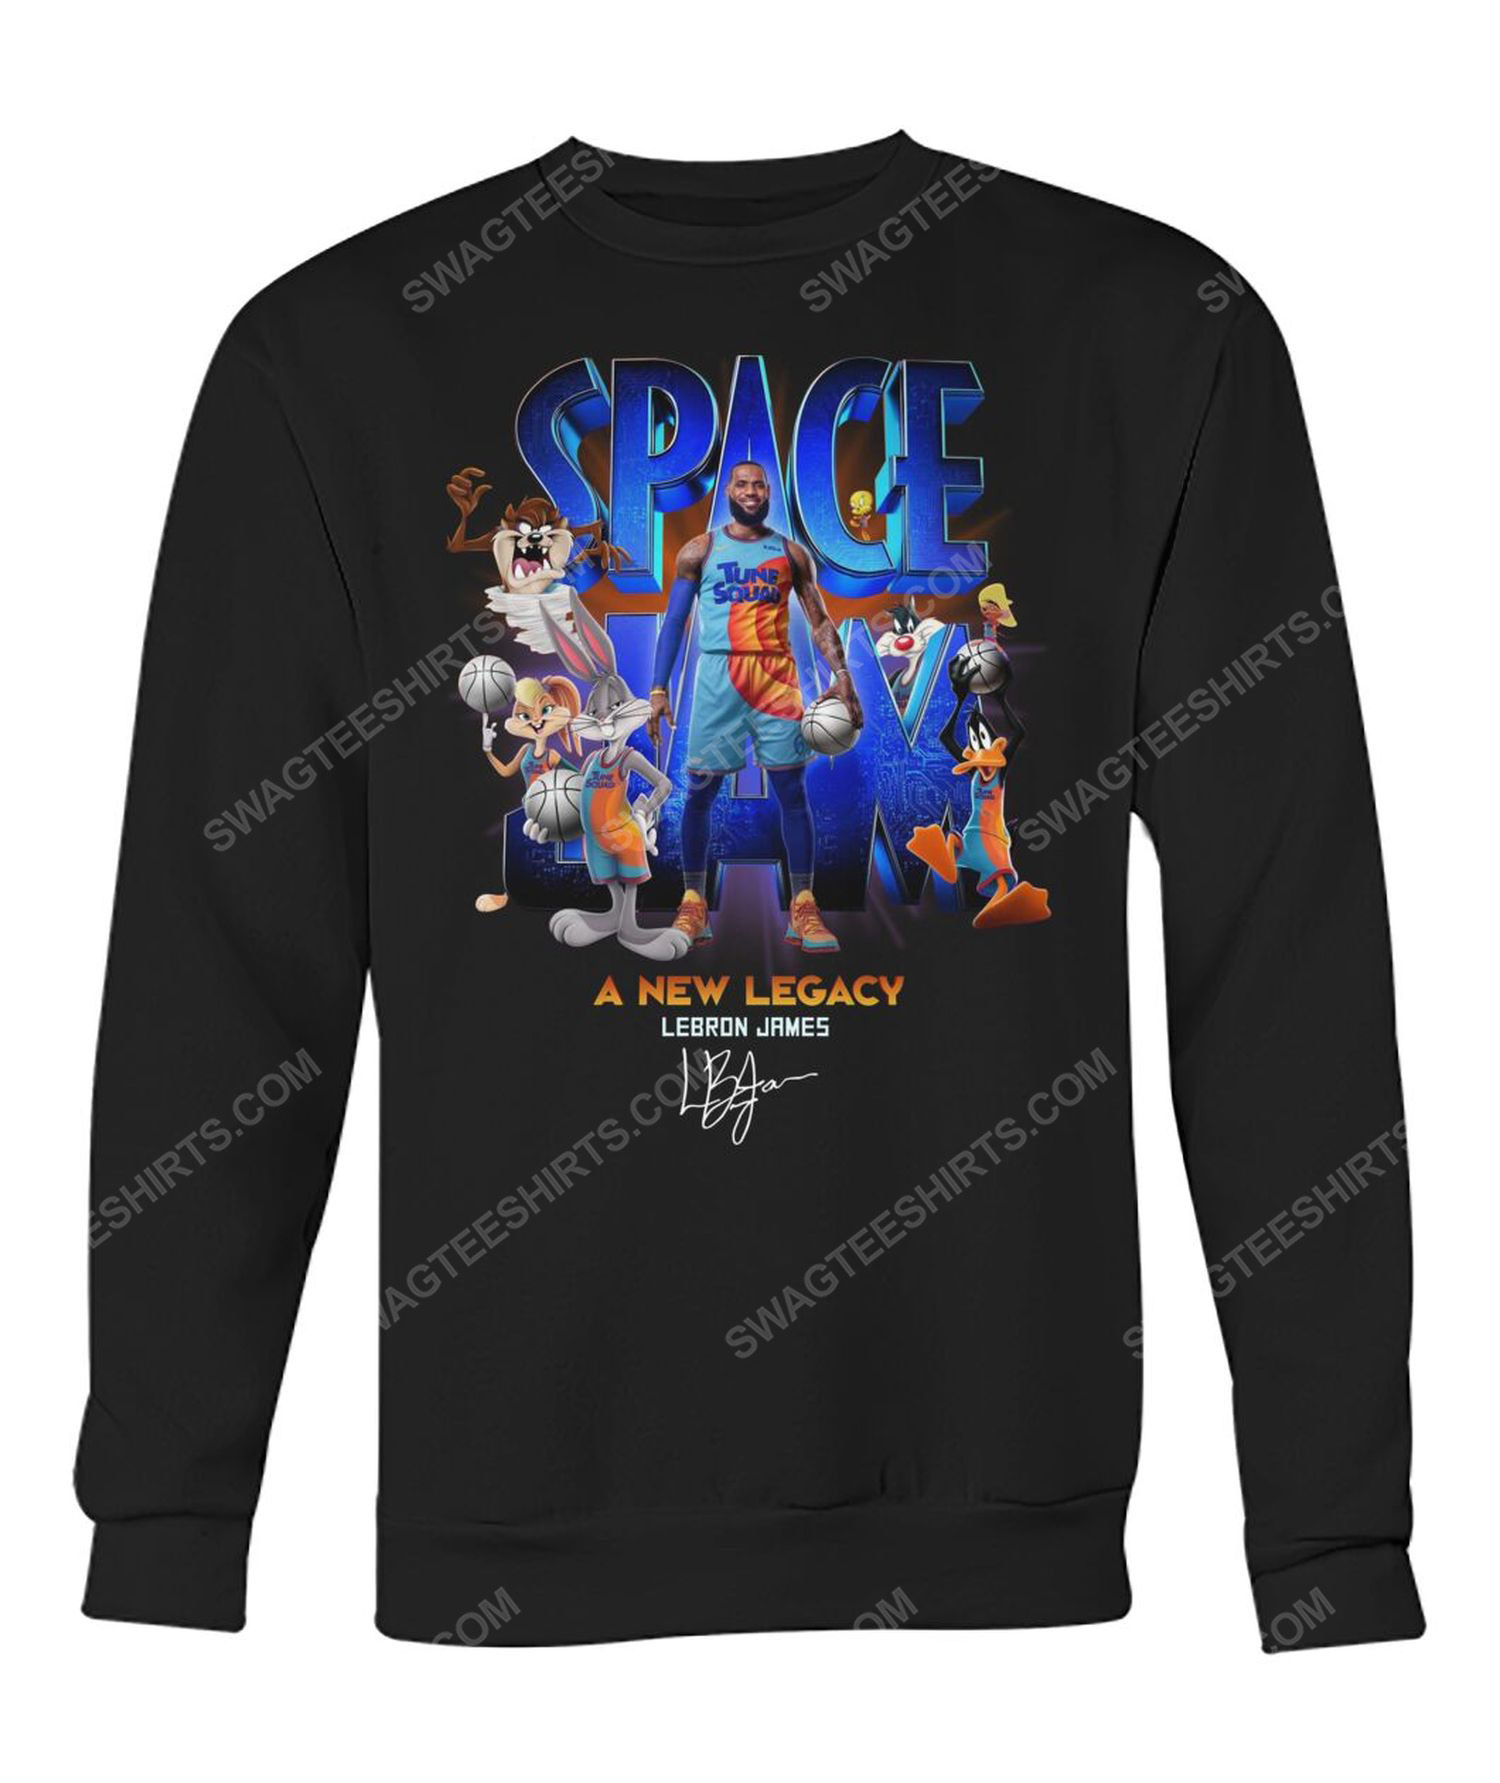 Space jam a new legacy lebron james sweatshirt